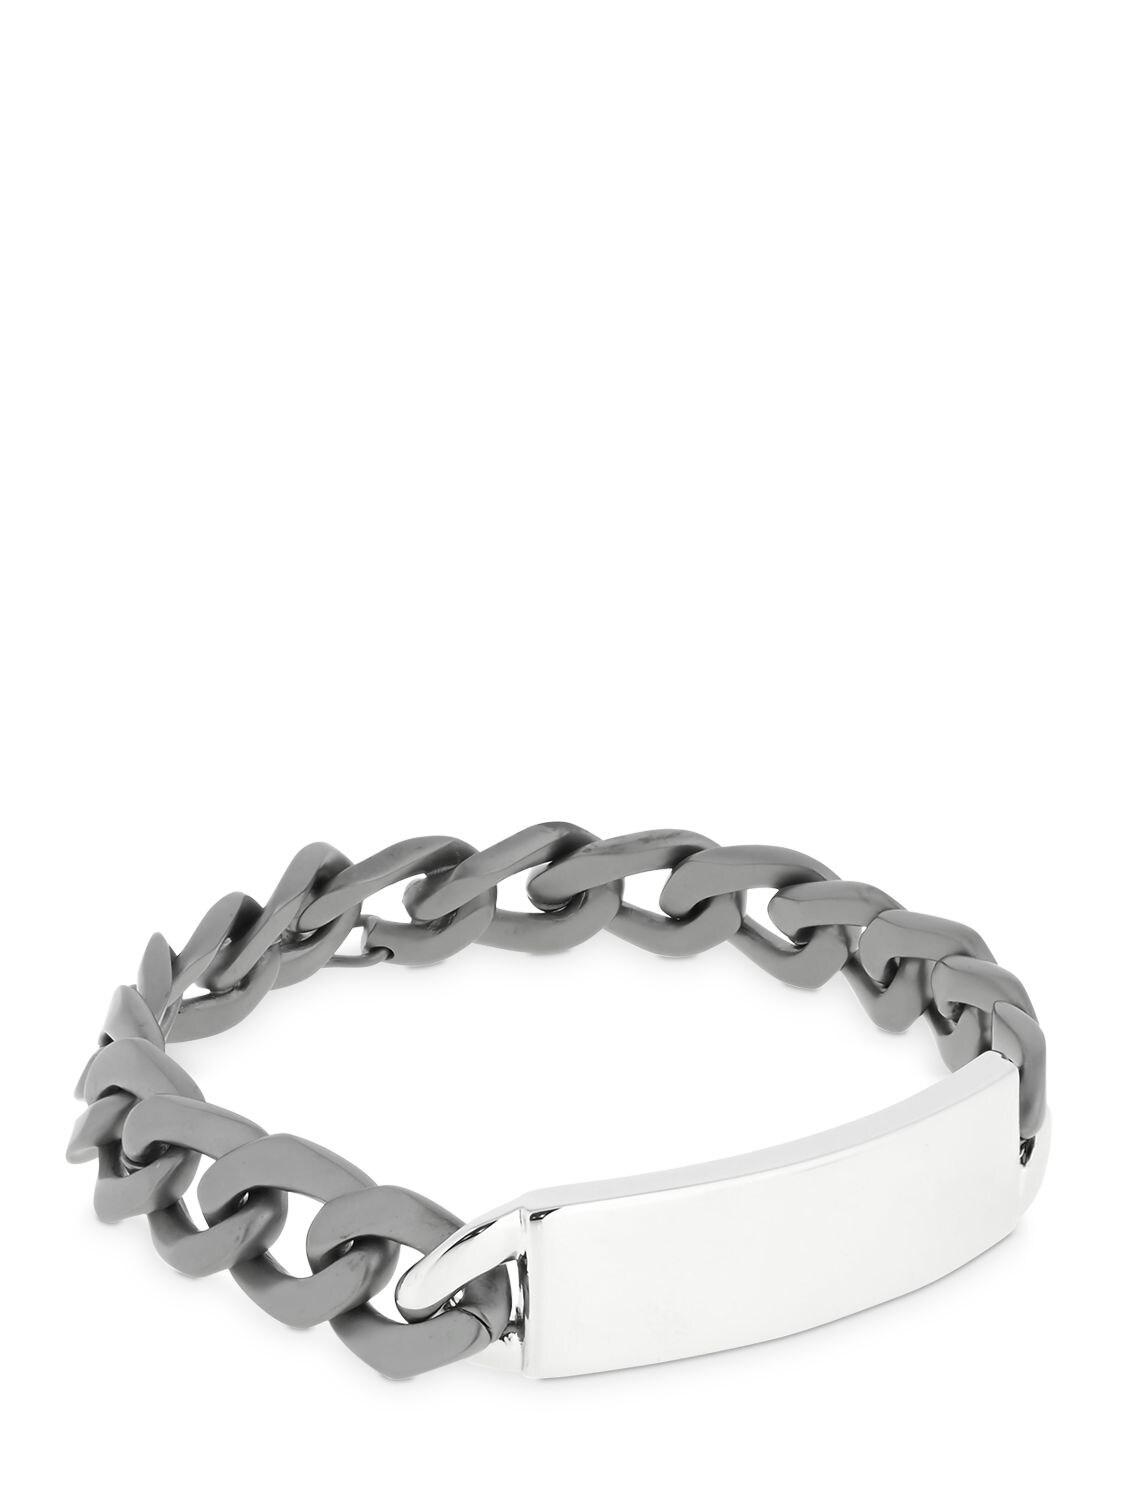 Maison Margiela Chain Bracelet W/ Tag in Metallic for Men - Lyst